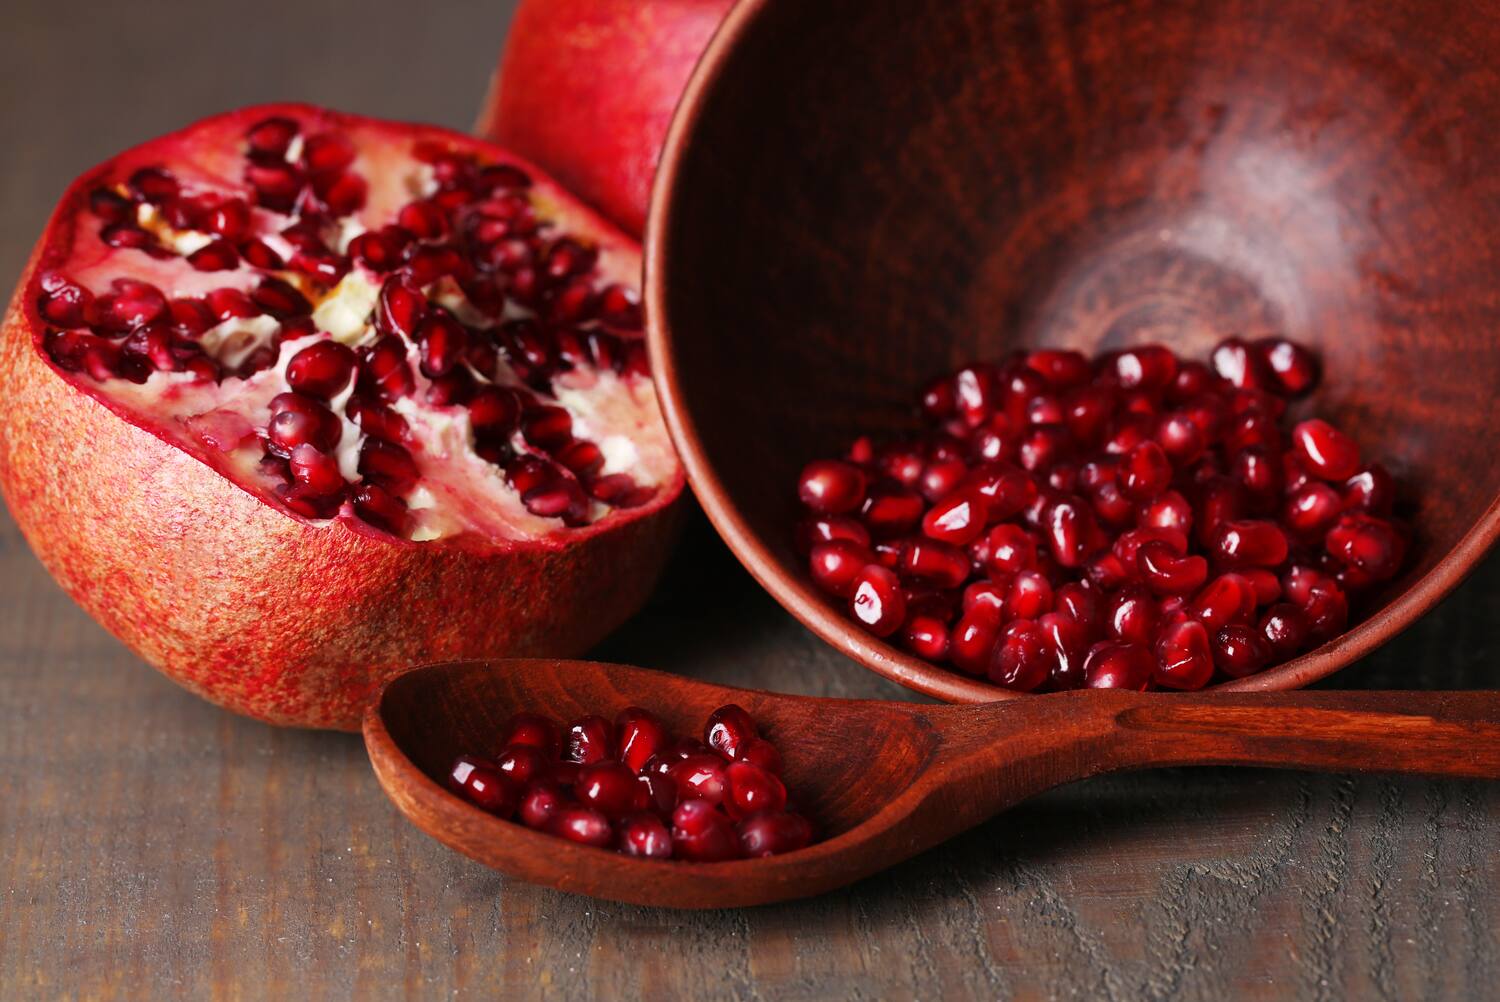 10 health benefits of pomegranate